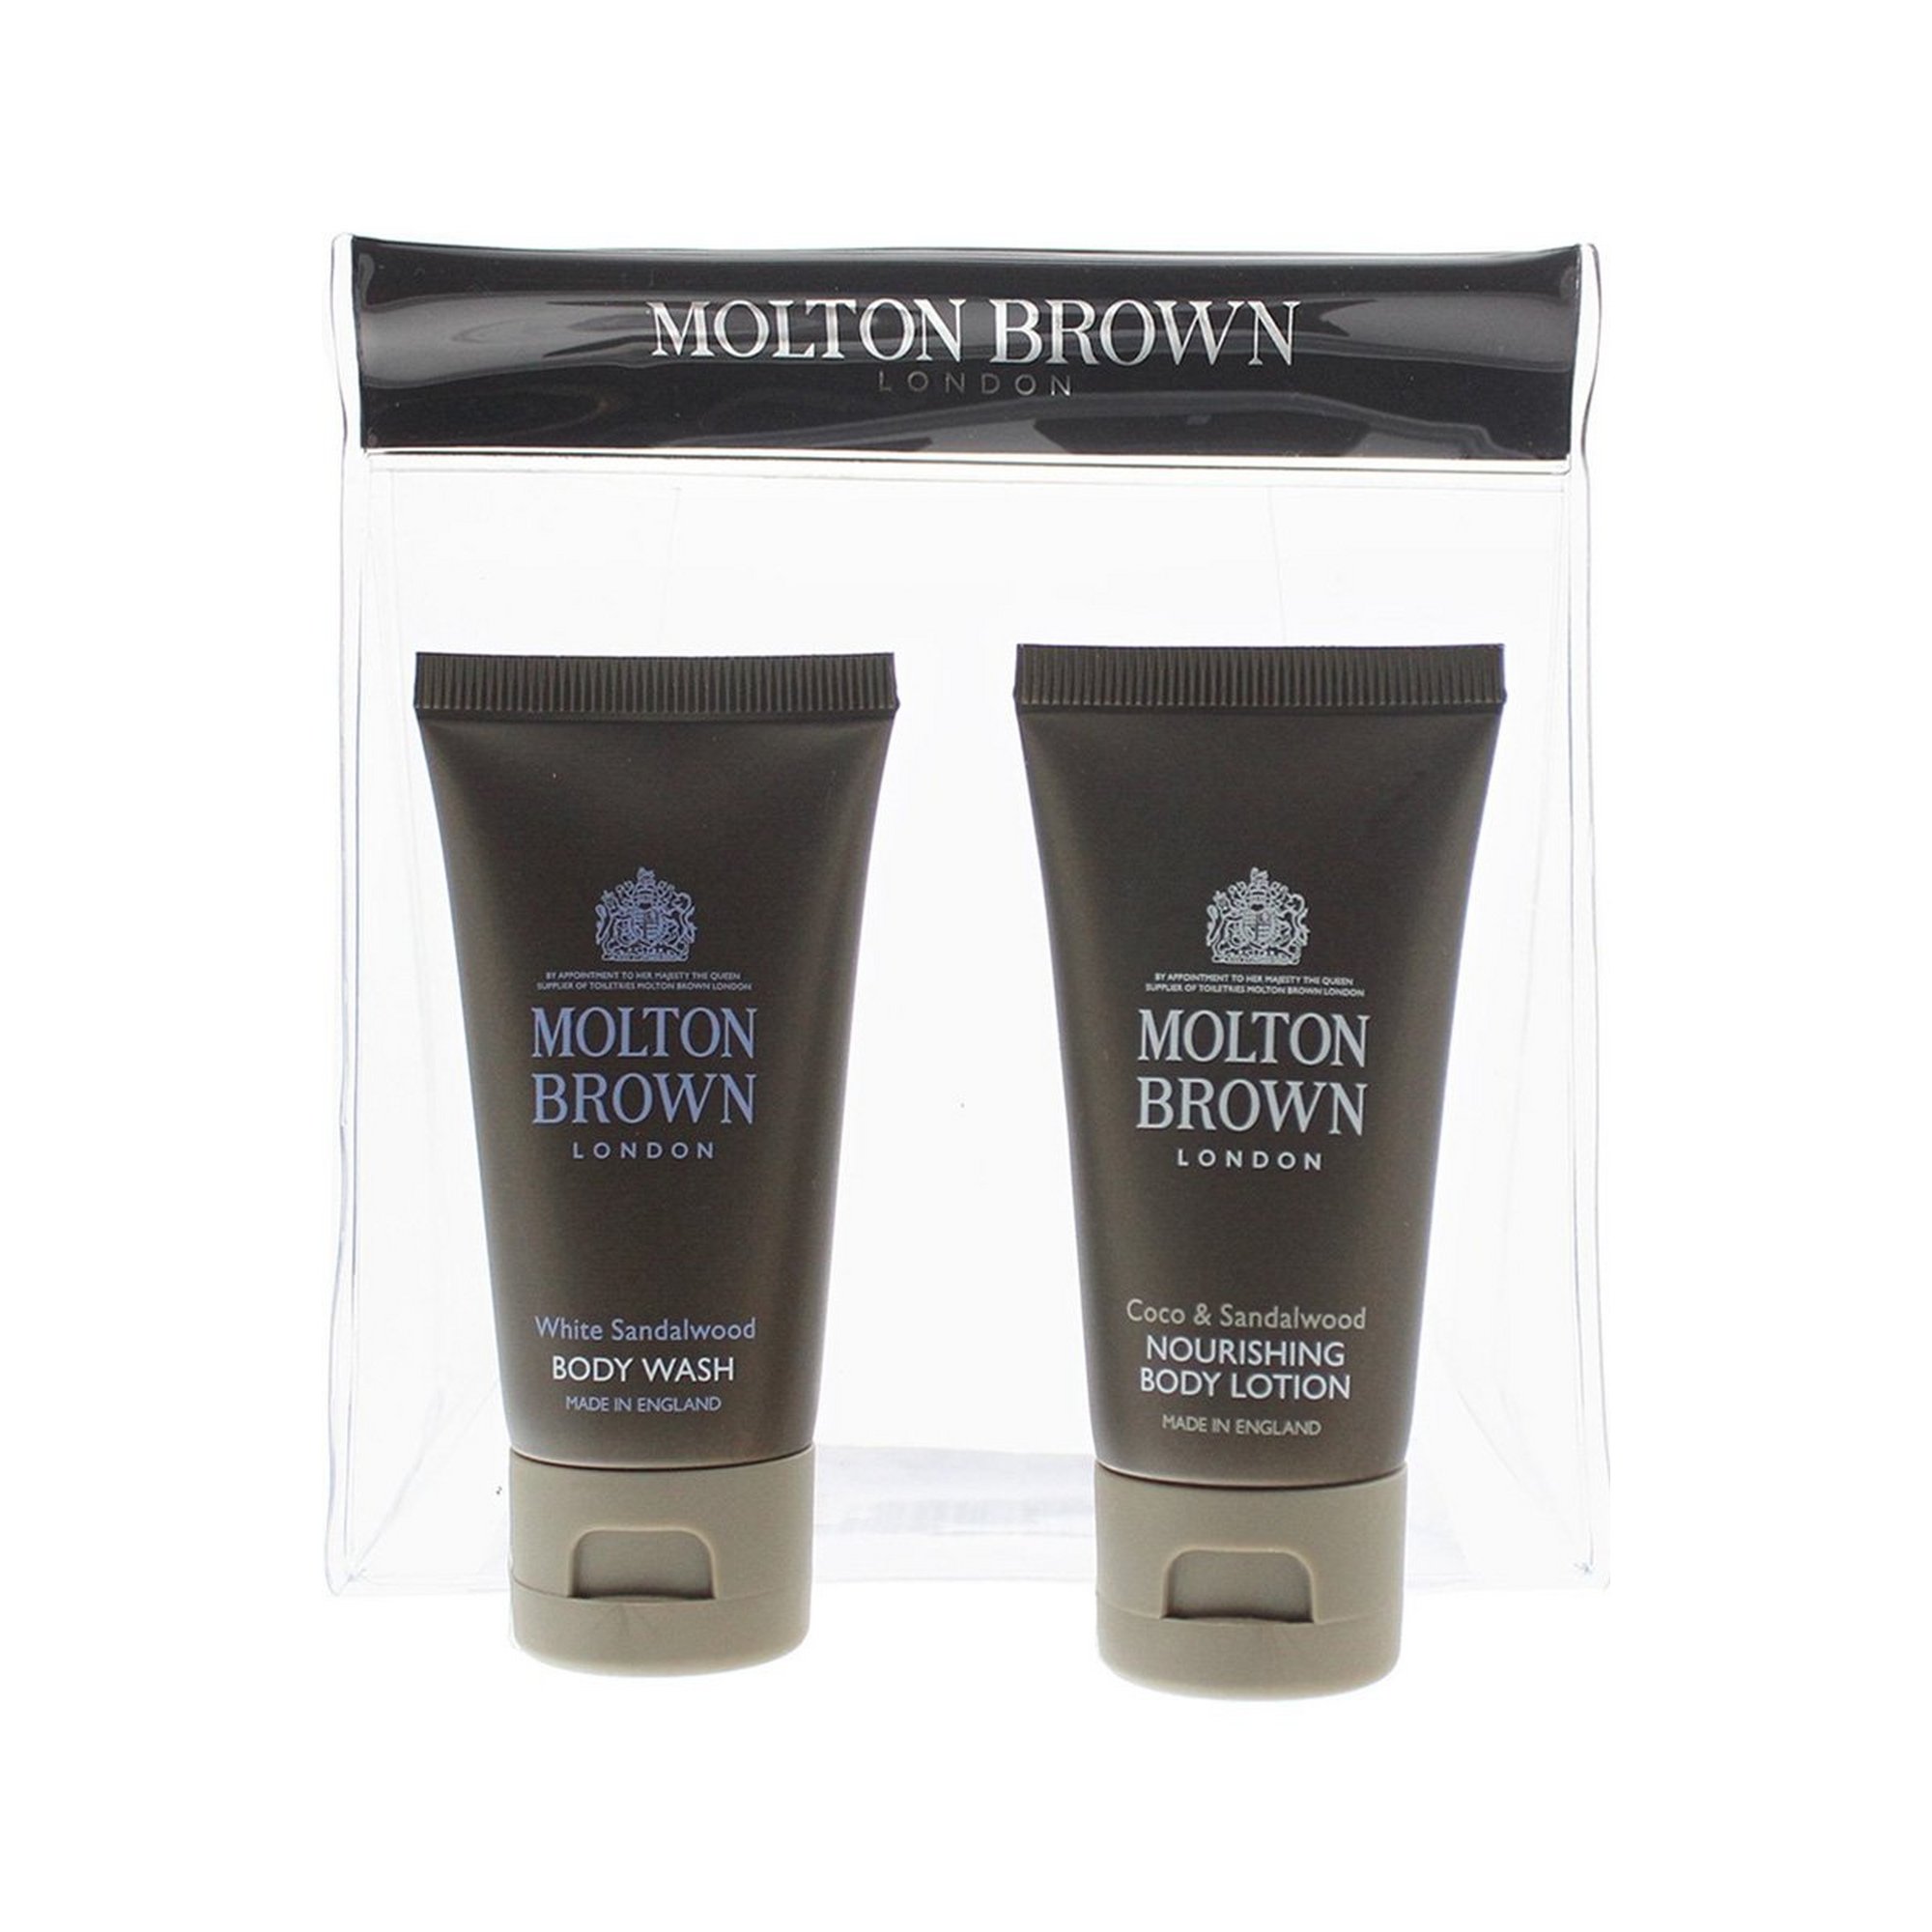 MOLTON BROWN Molton Brown 2 Piece Gift Set